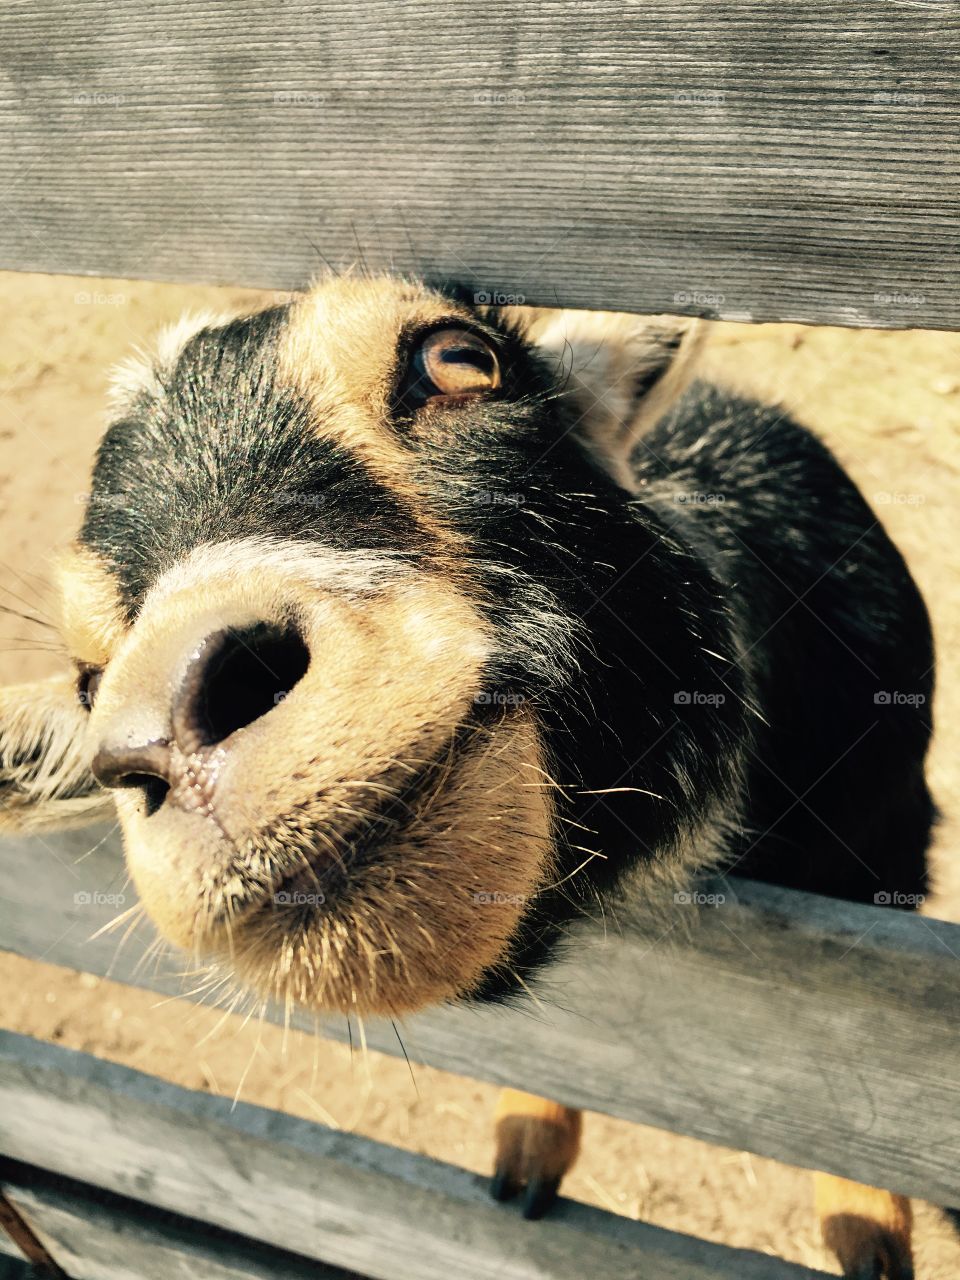 Extreme close-up of goat